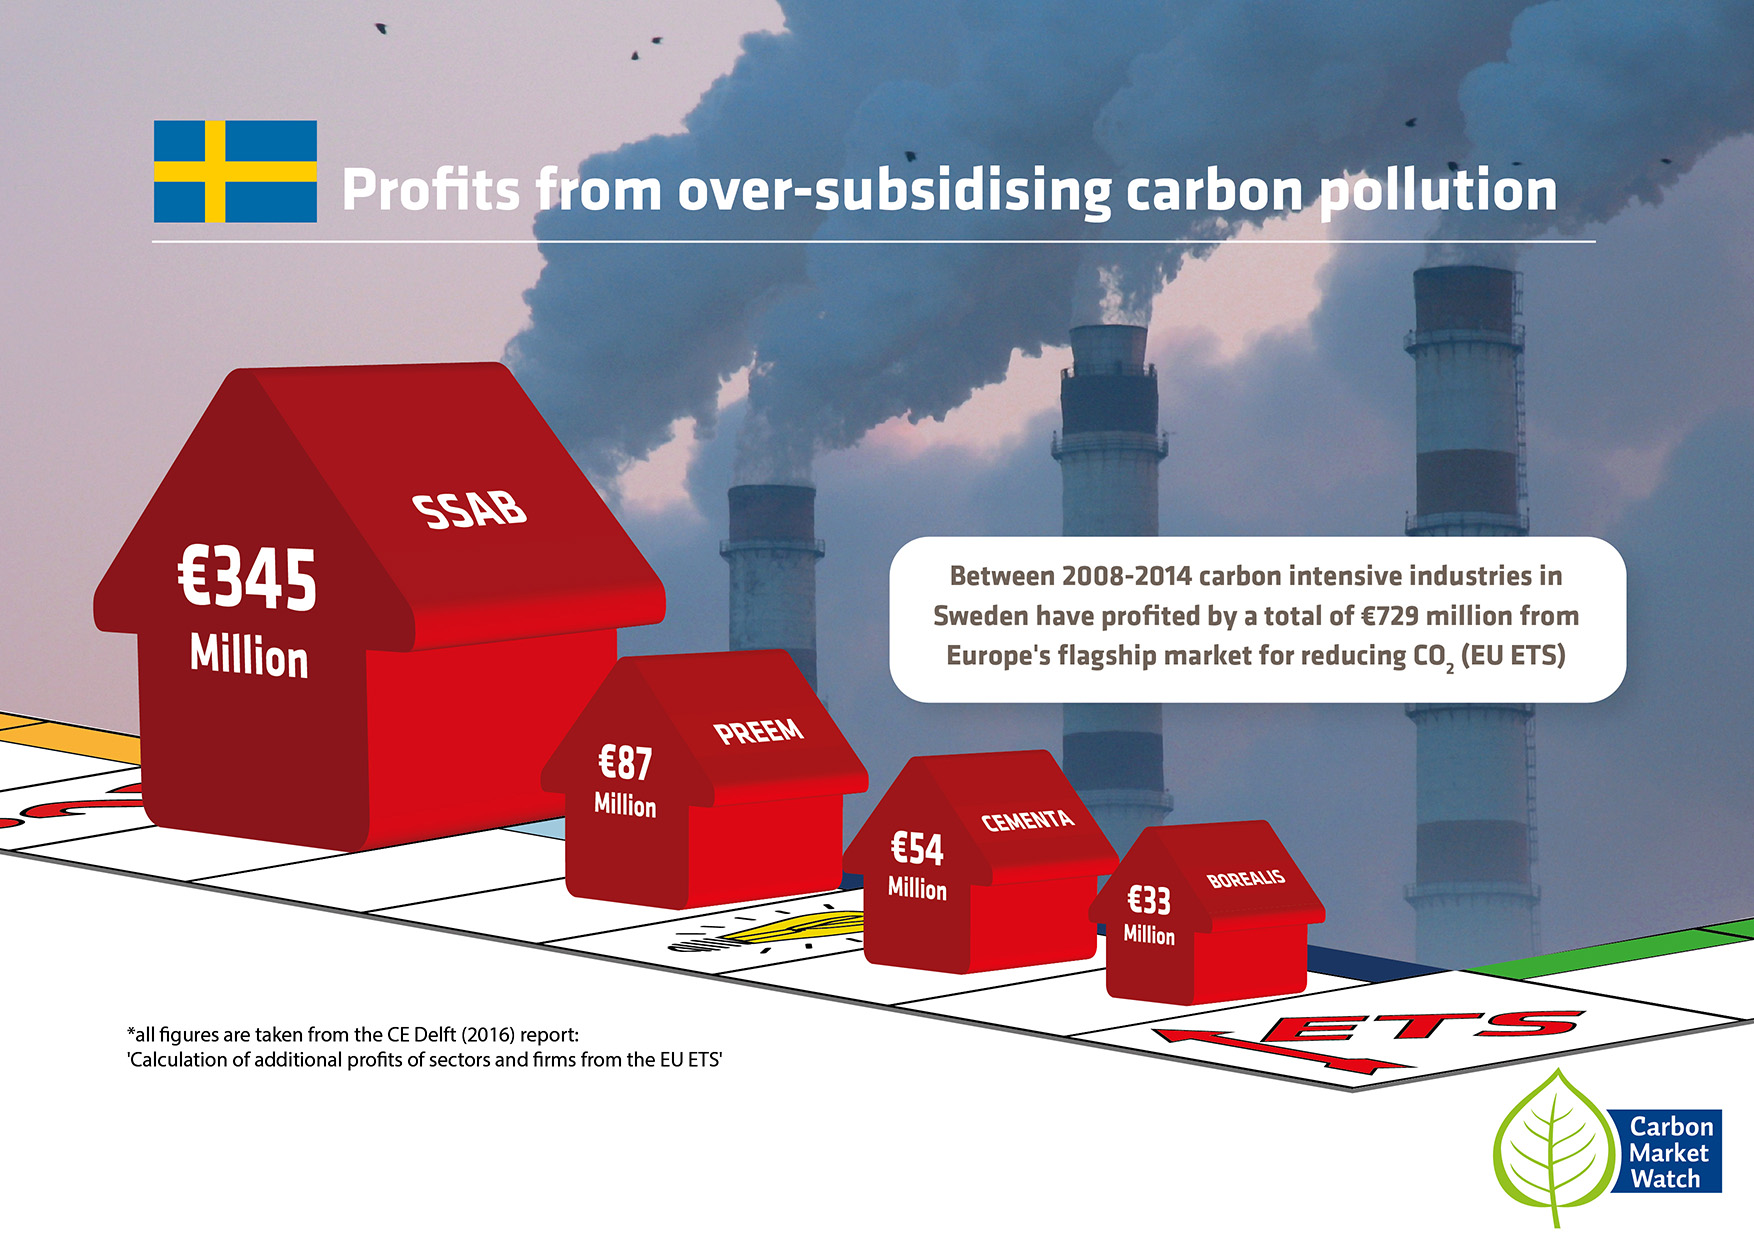 carbon-leakage-mythbuster-sweden-carbon-market-watch